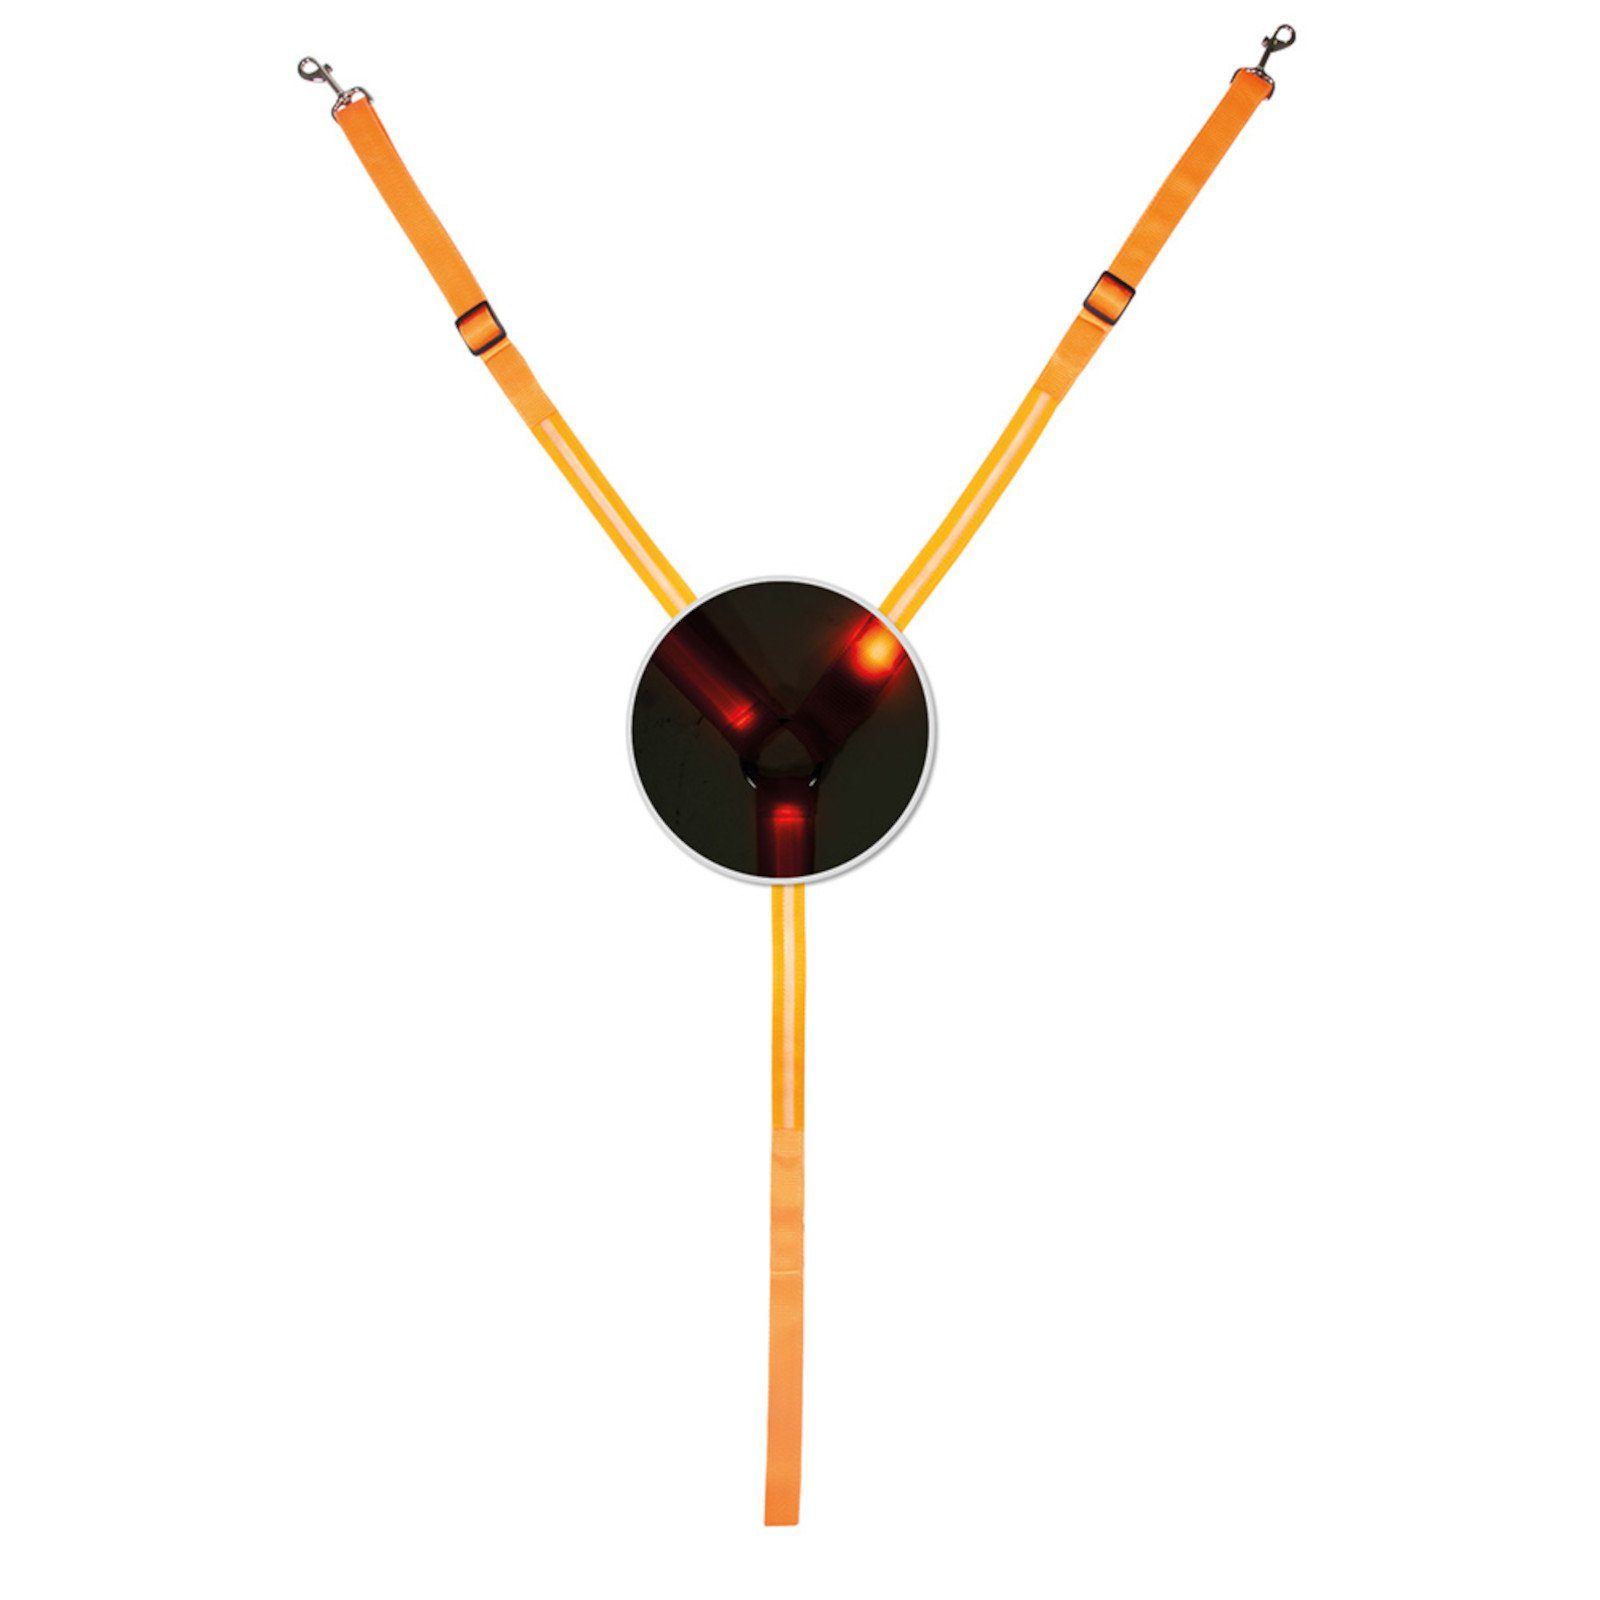 PFIFF Vorderzeug Warmblut, LED Reflektions-Vorderzeug - - - (orange Pfiff Warmblut) orange